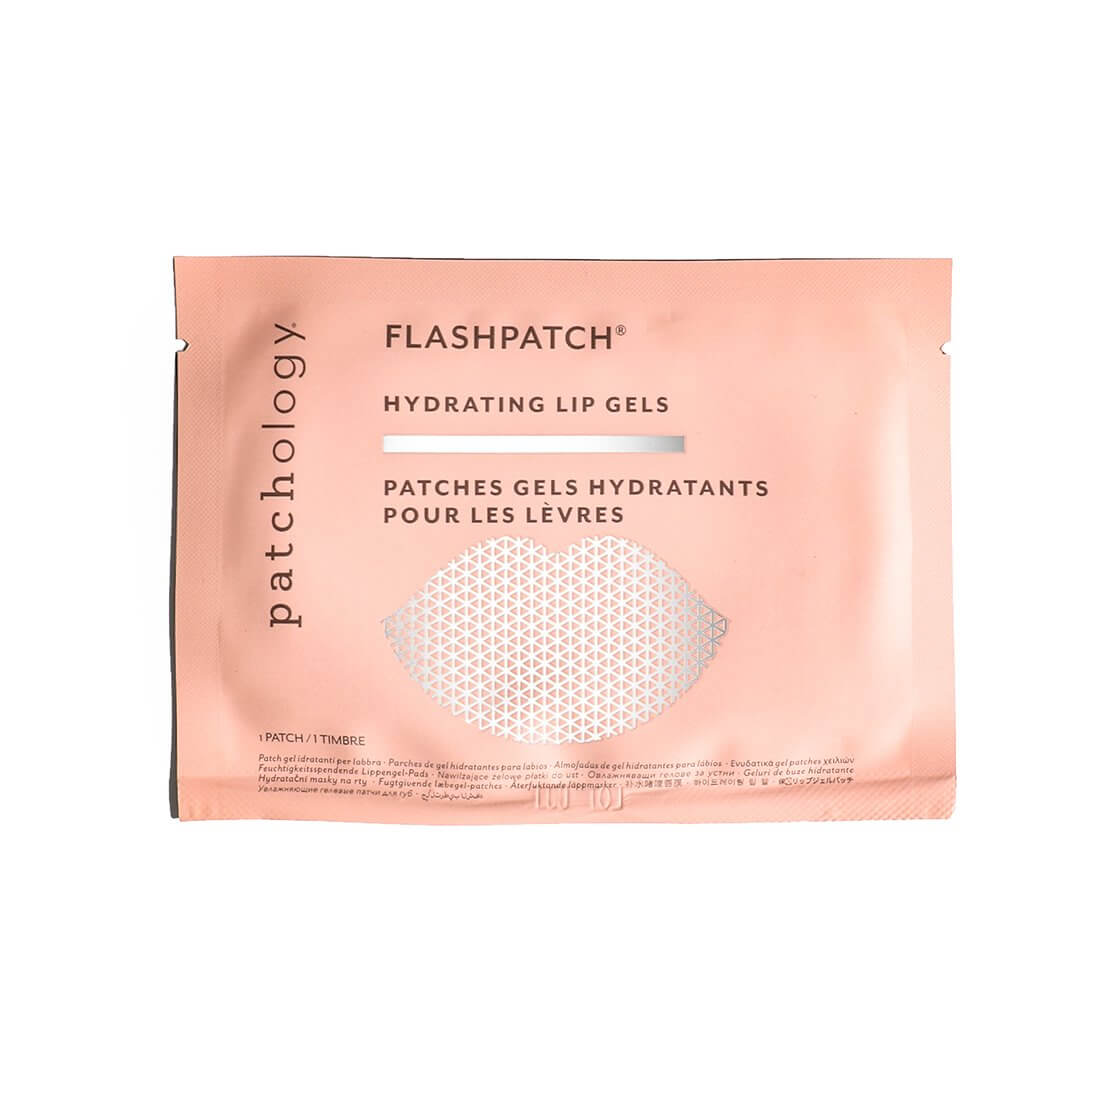 Flashpatch hydrating lip gels packaging